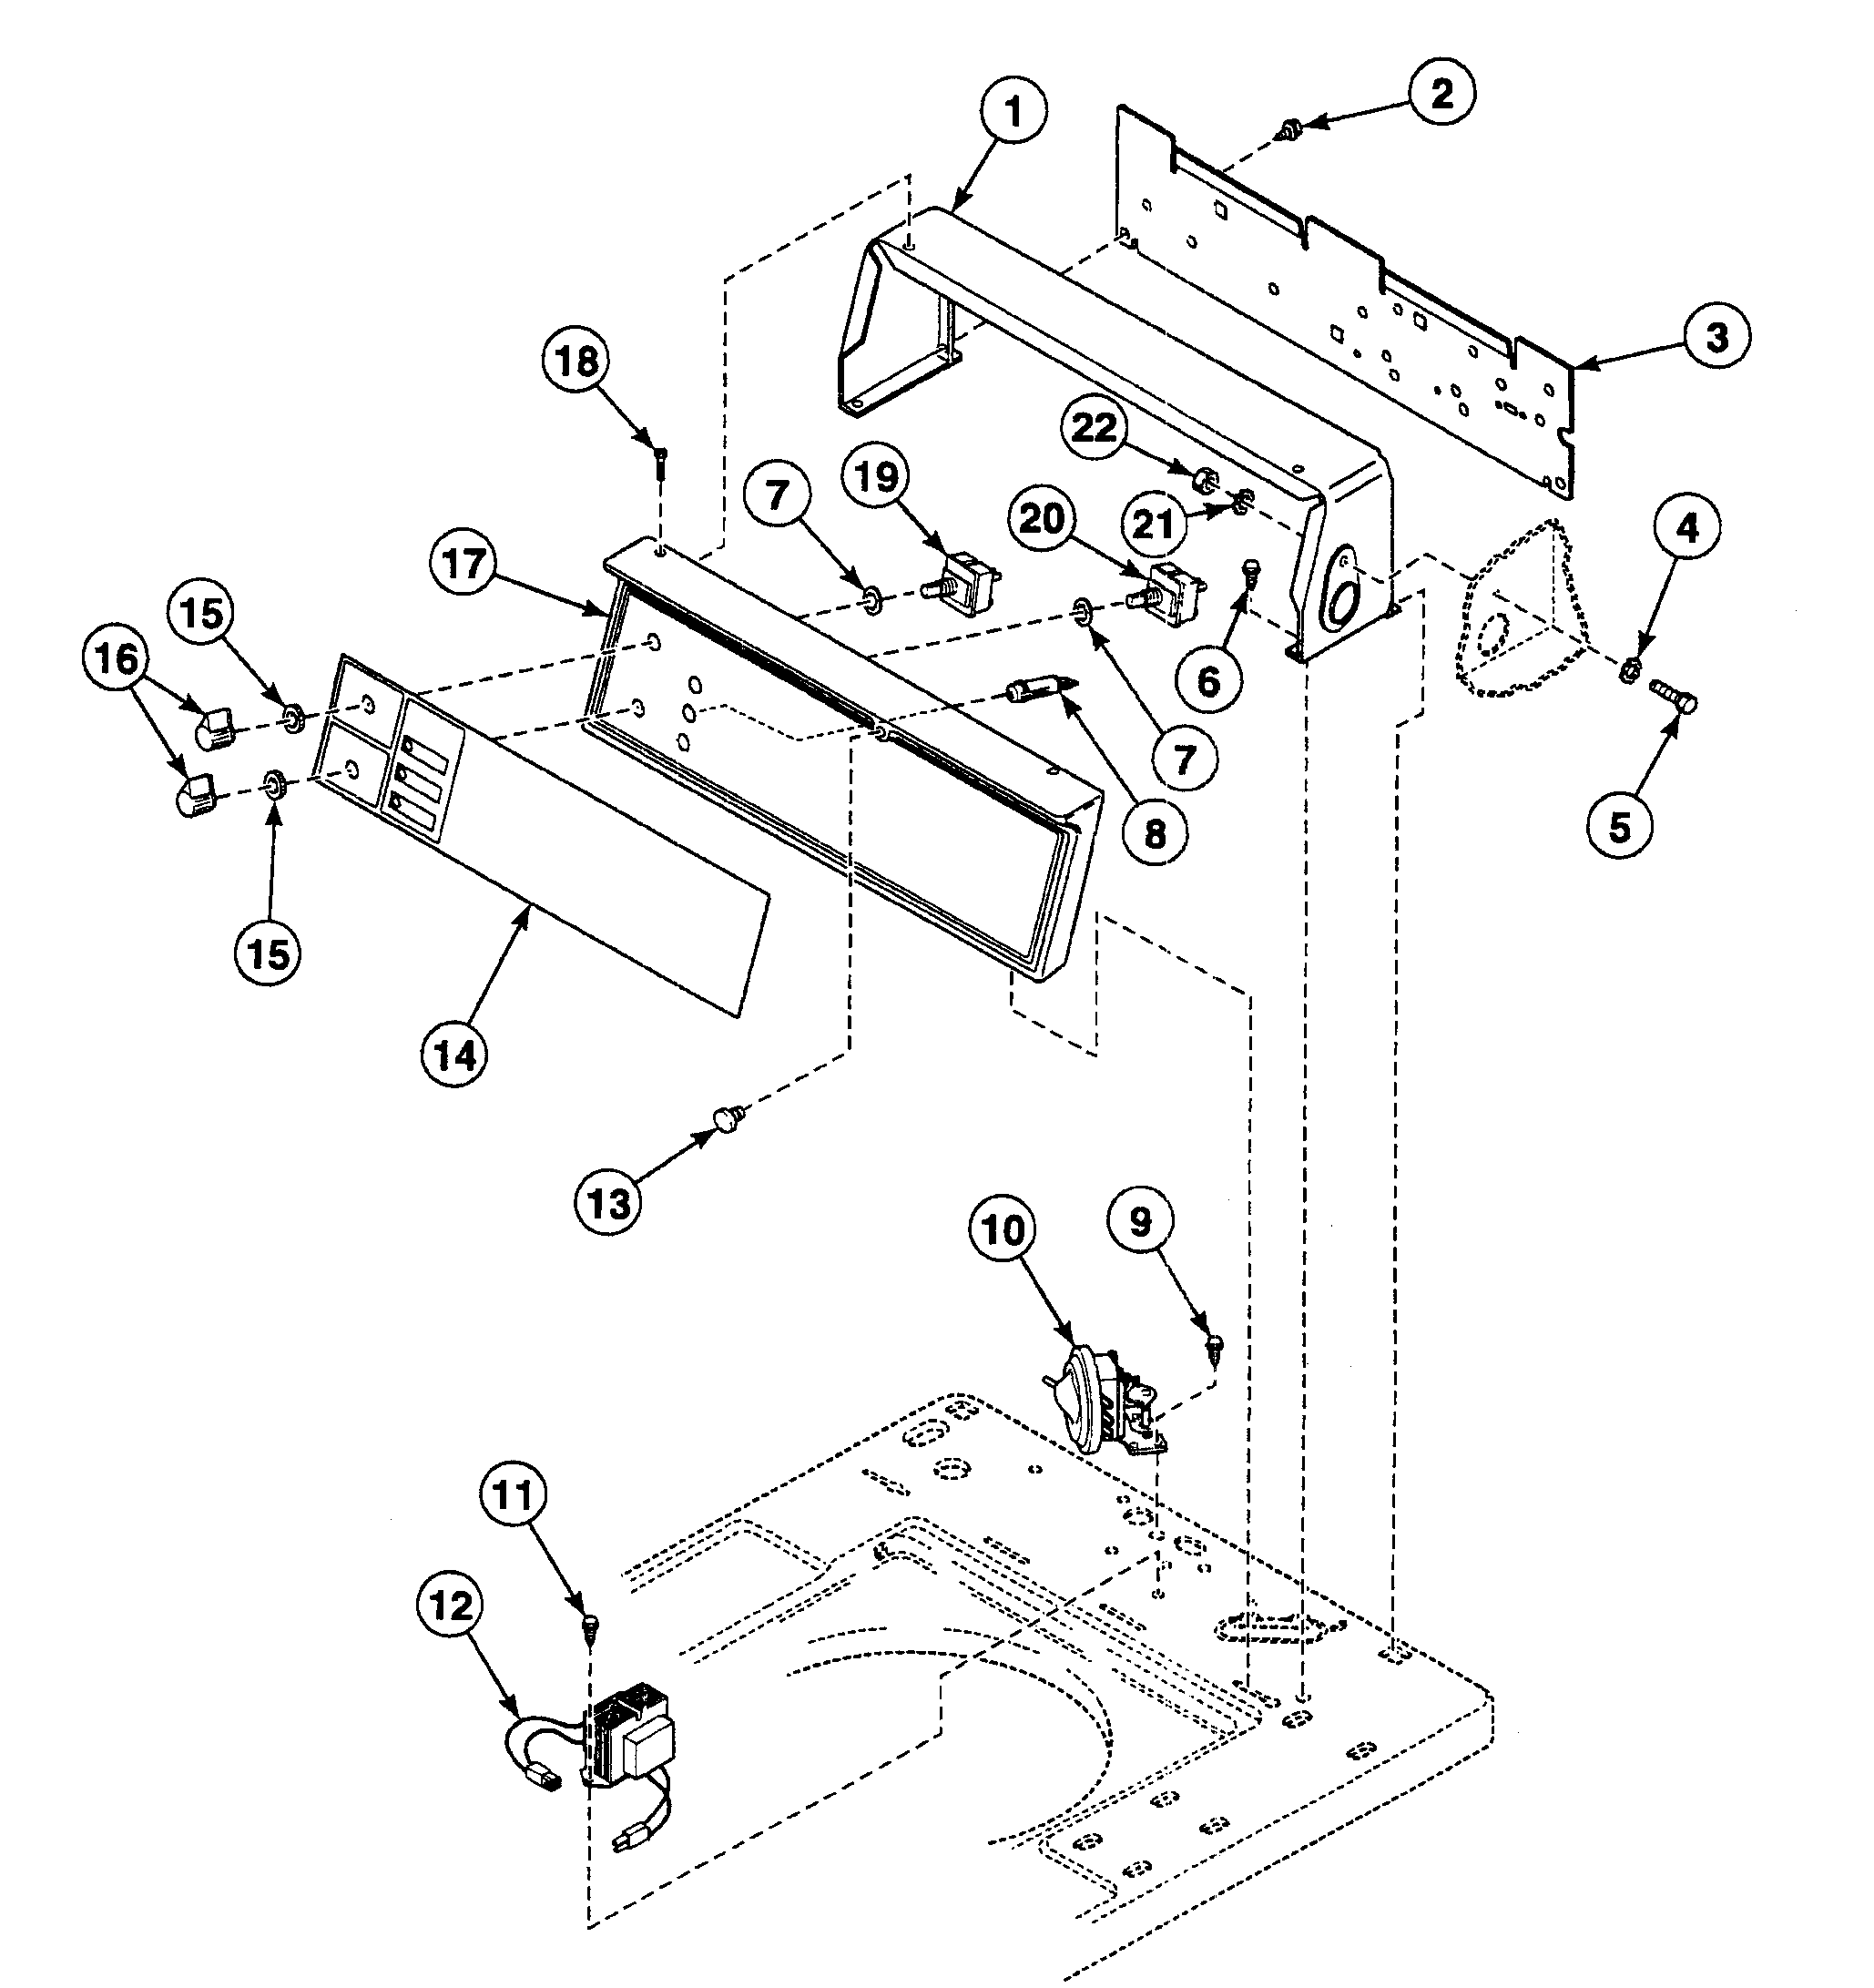 29 Speed Queen Dryer Parts Diagram - Free Wiring Diagram Source